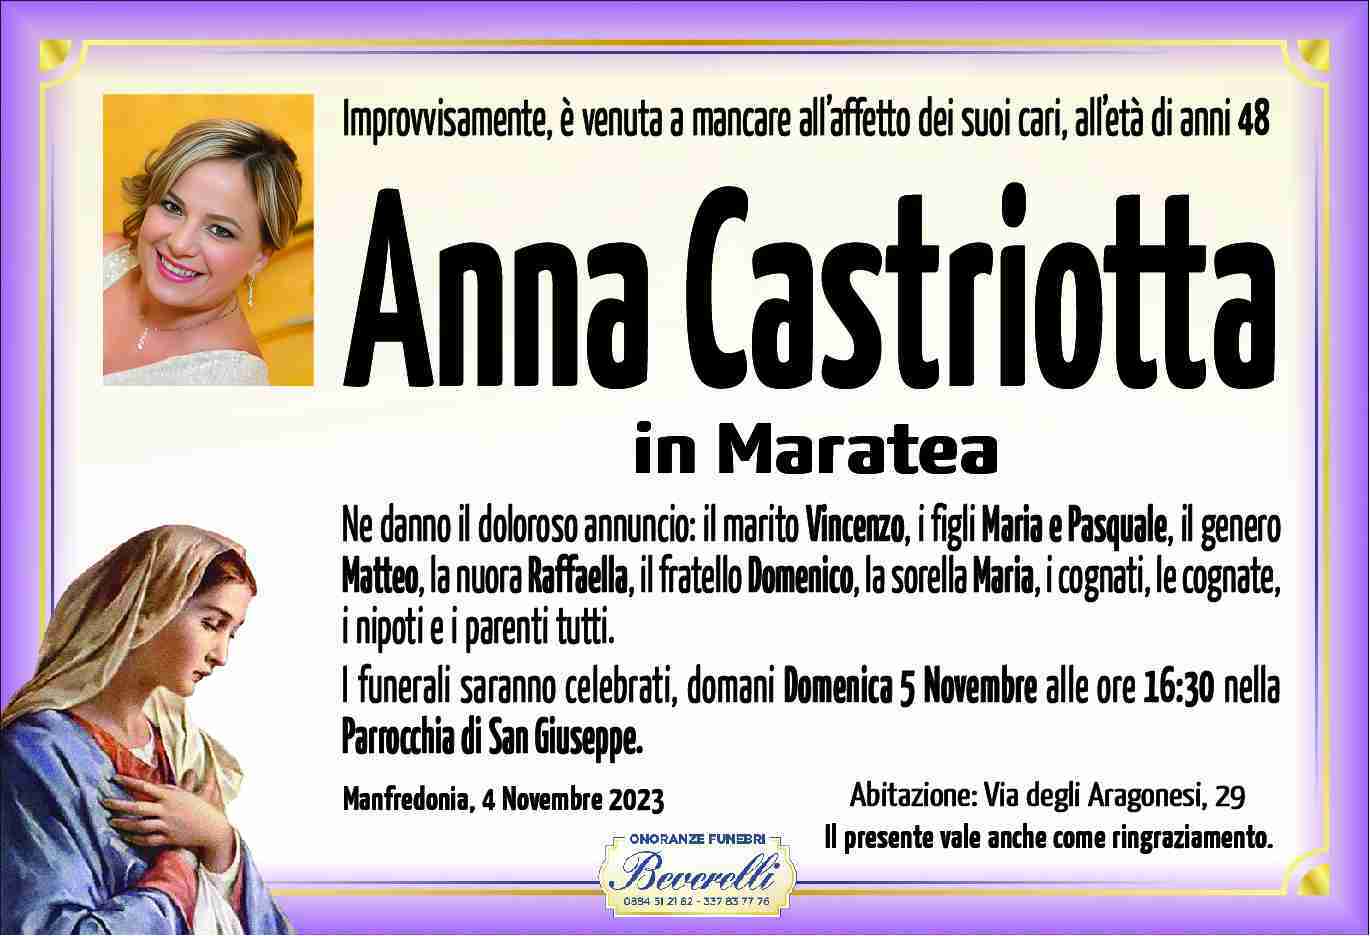 Anna Castriotta